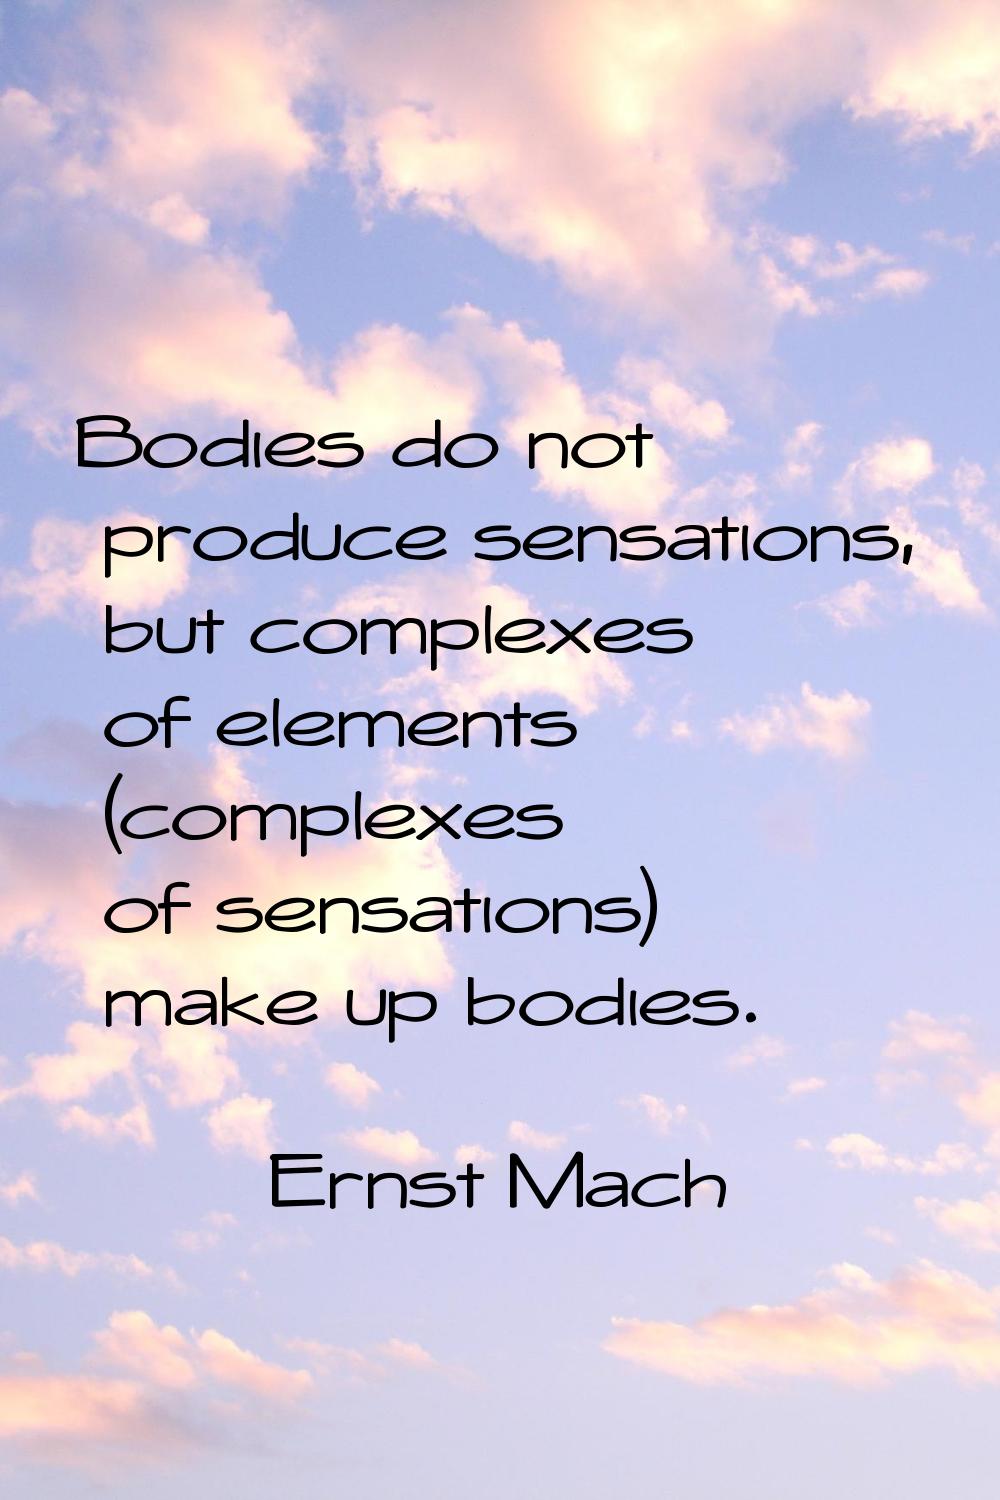 Bodies do not produce sensations, but complexes of elements (complexes of sensations) make up bodie